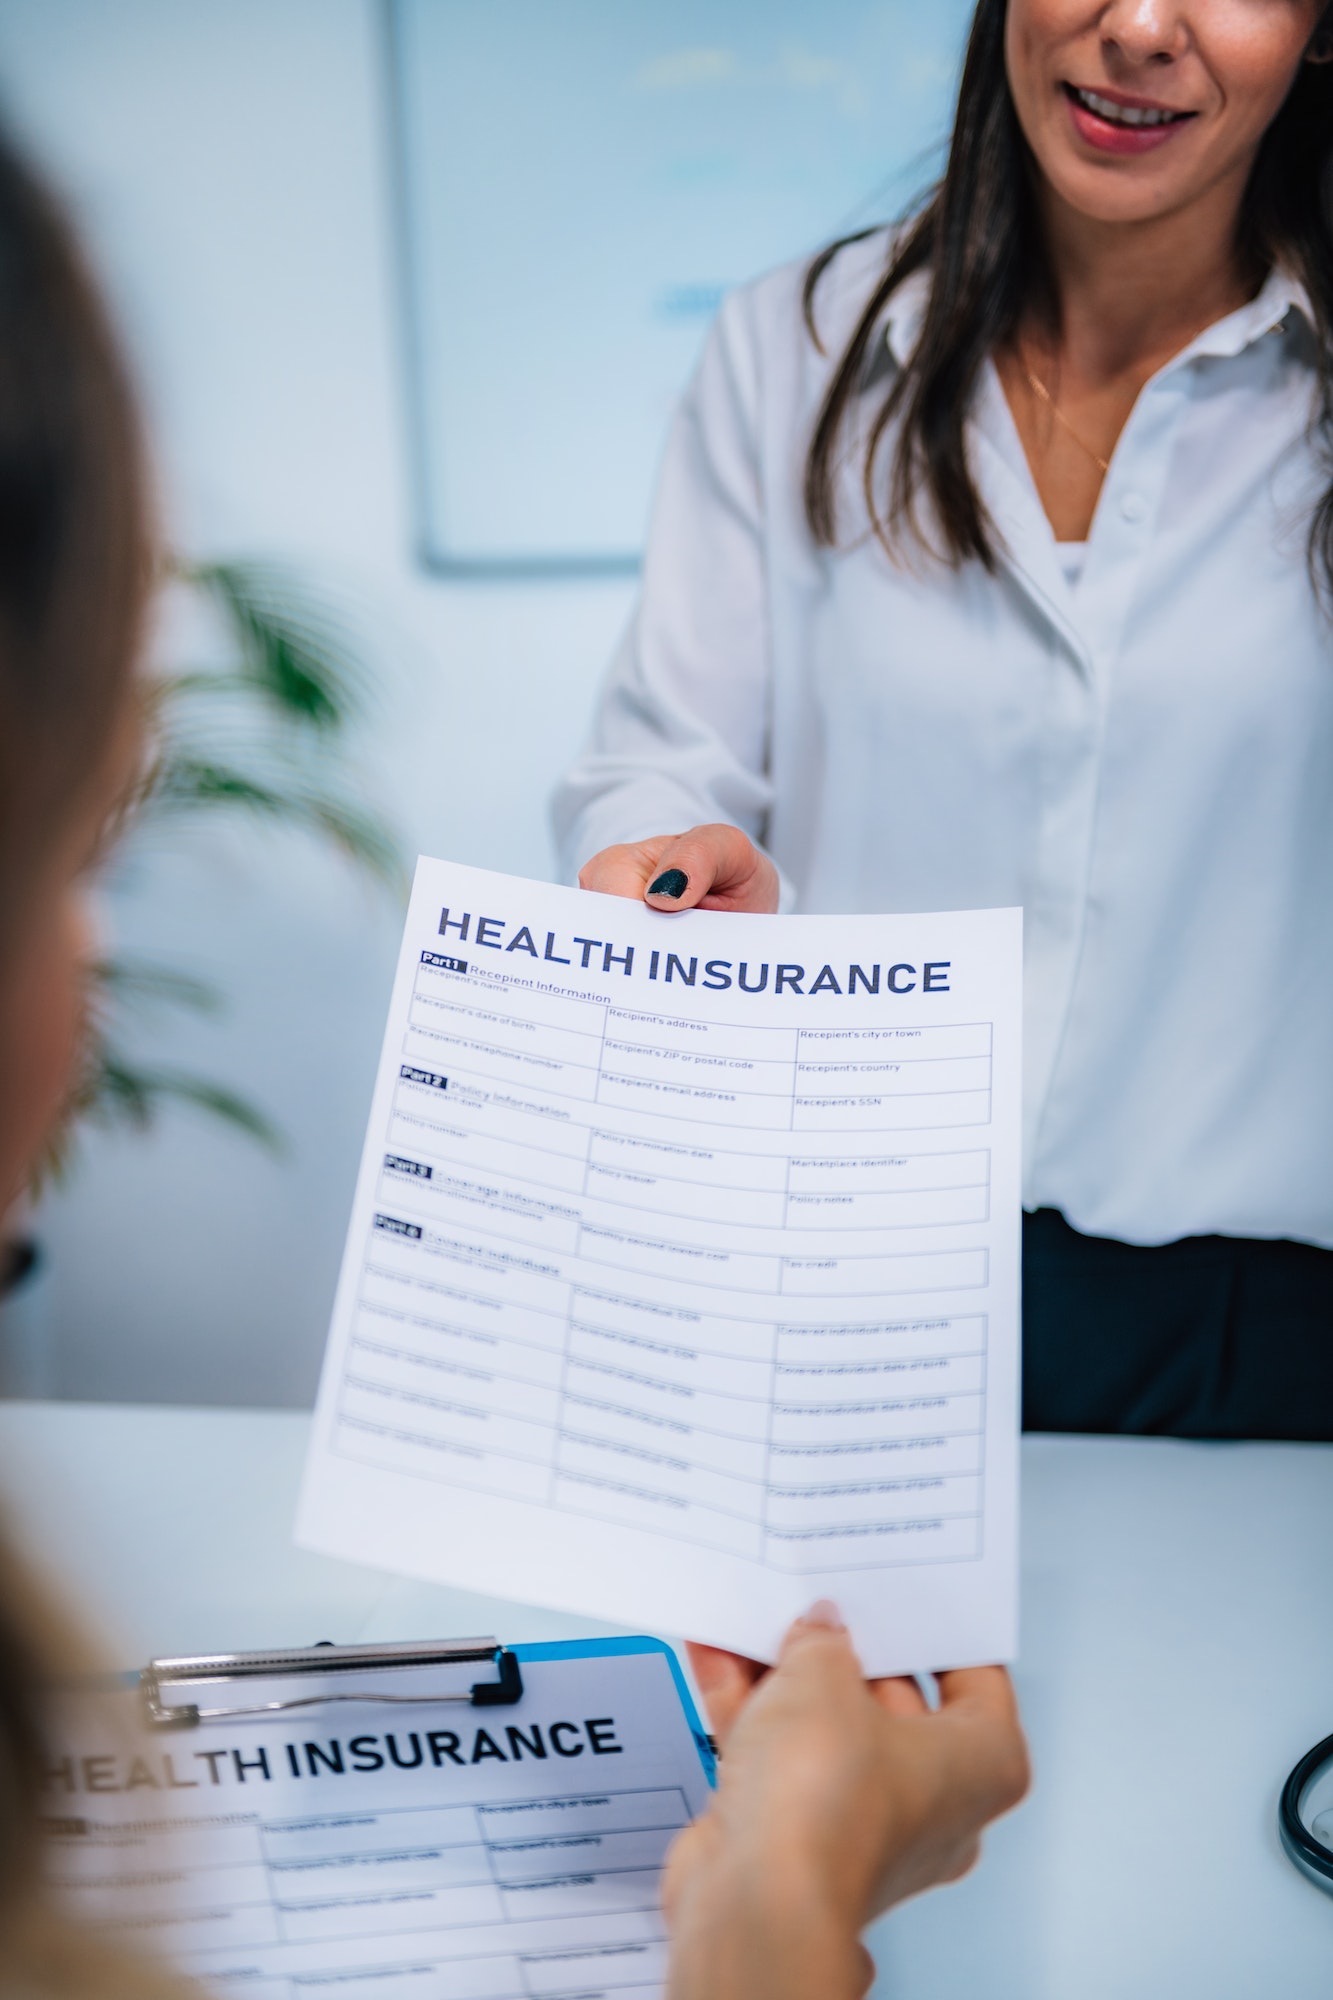 Health Insurance Claim Form